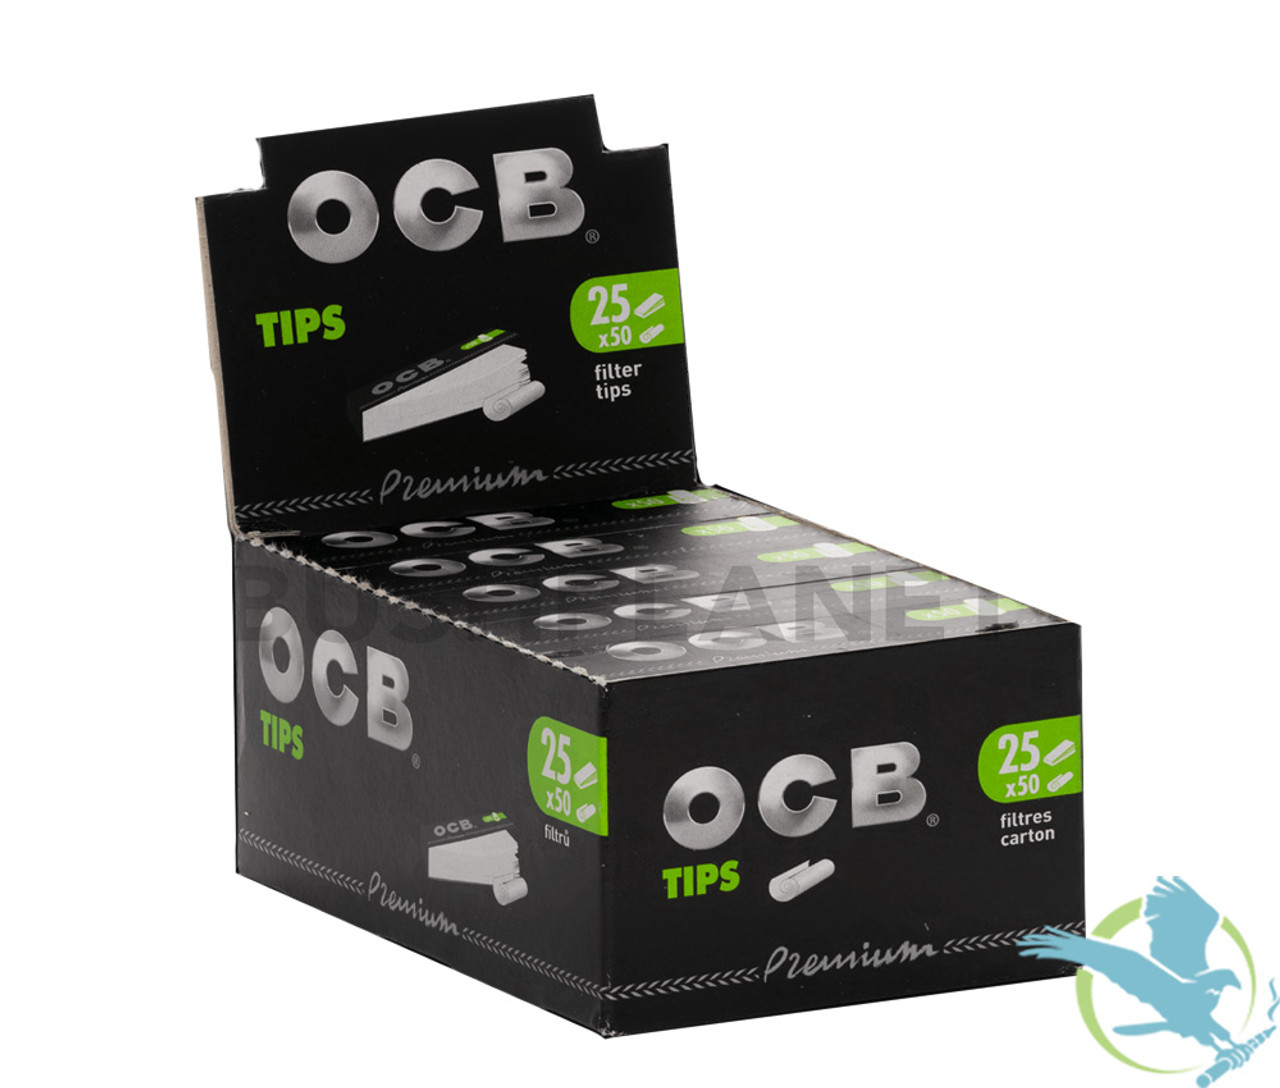 OCB Filter Tips - Box of 25 Packs, Rolling Paper